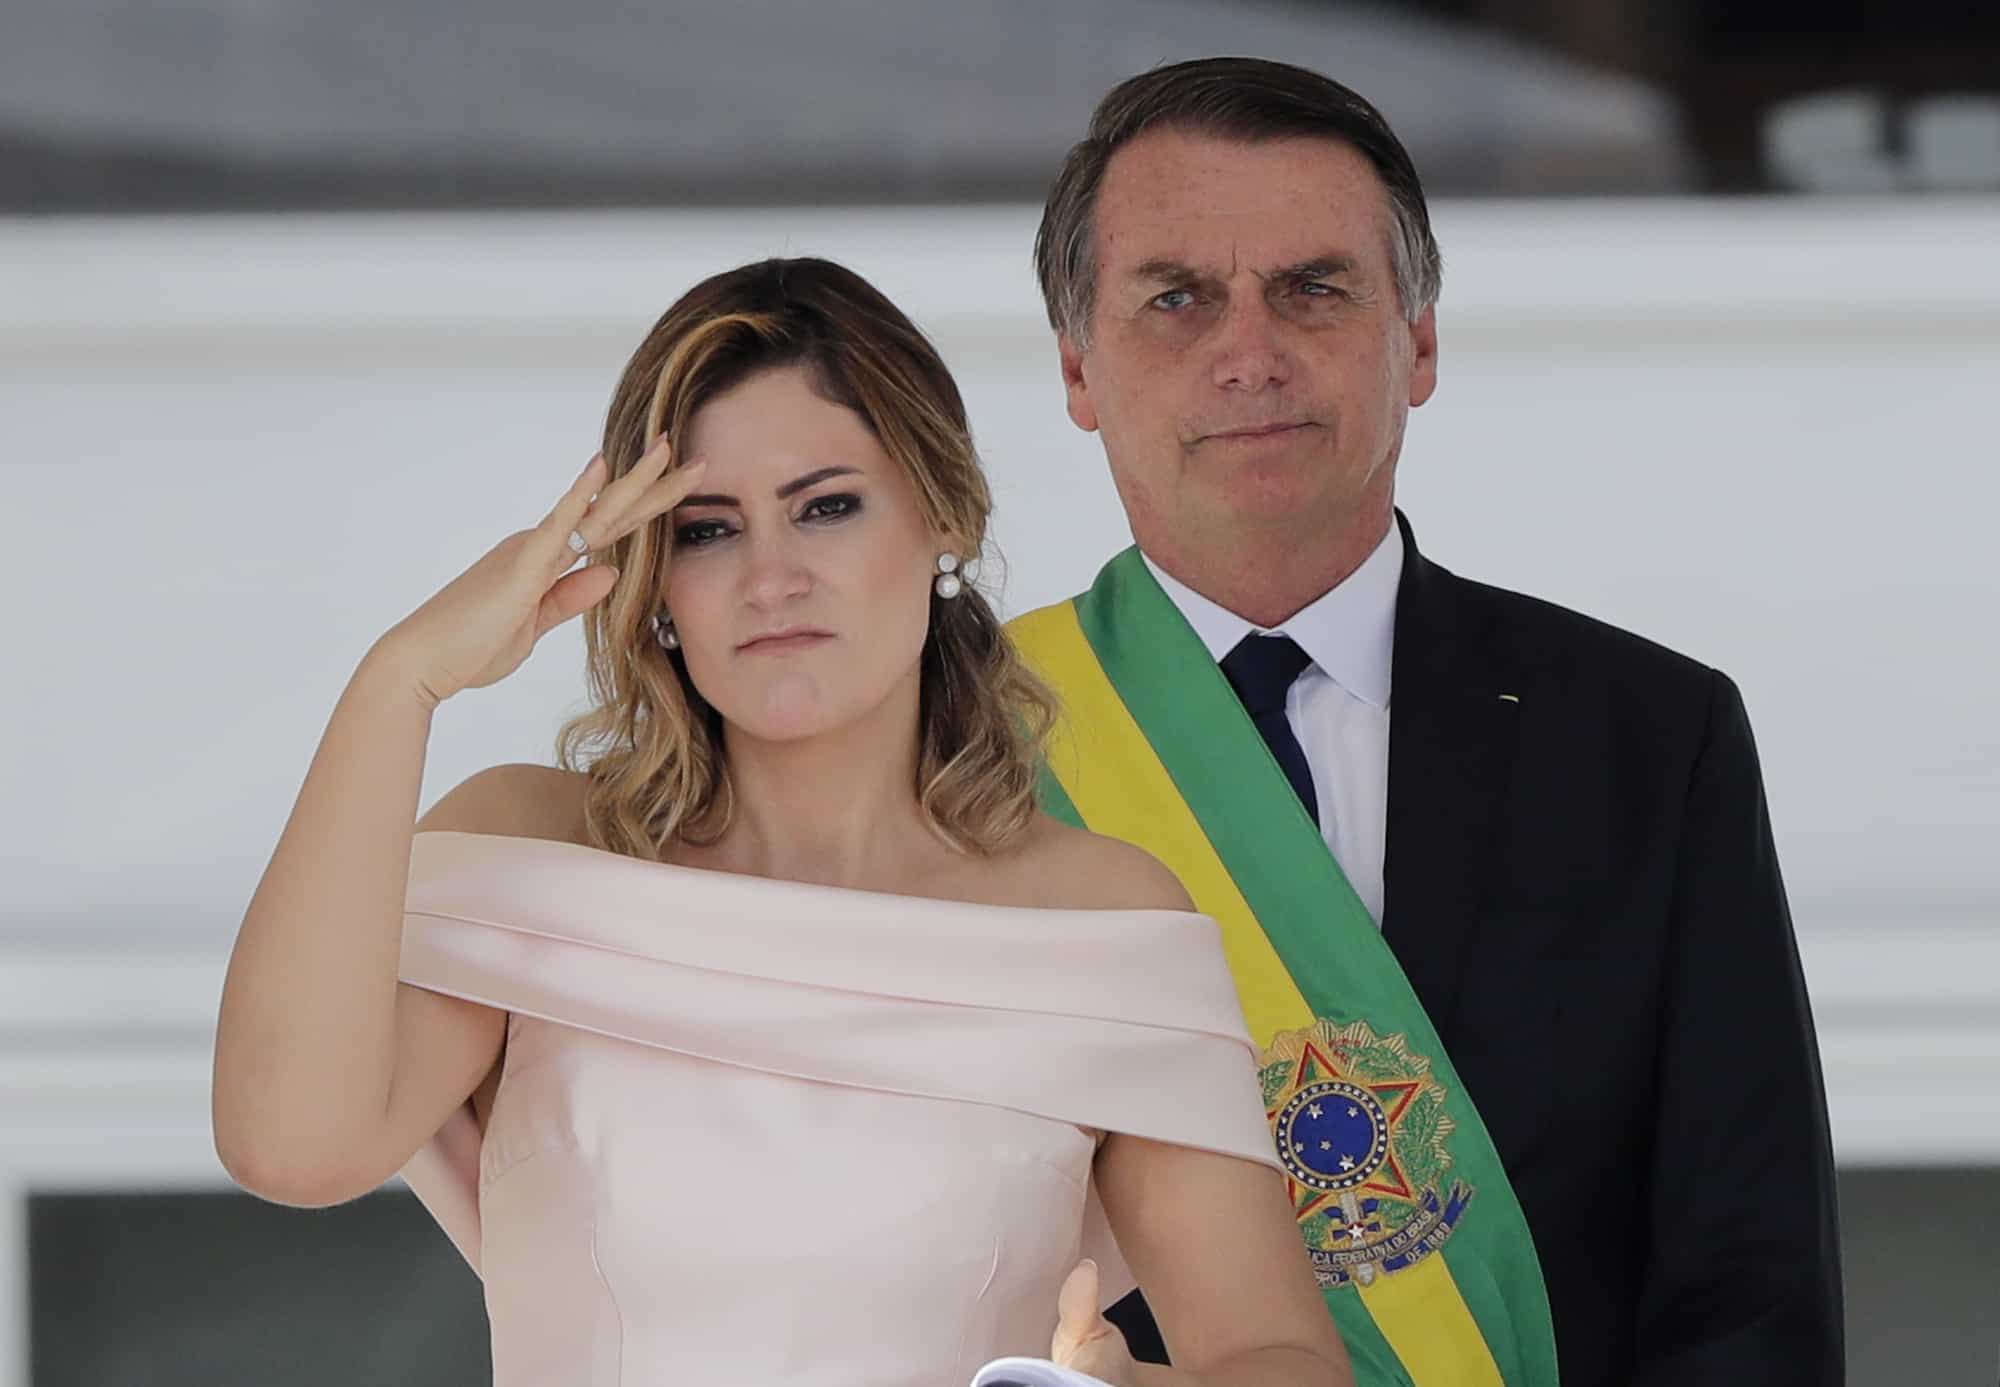 Jair Bolsonaro, President of Brazil, Corona